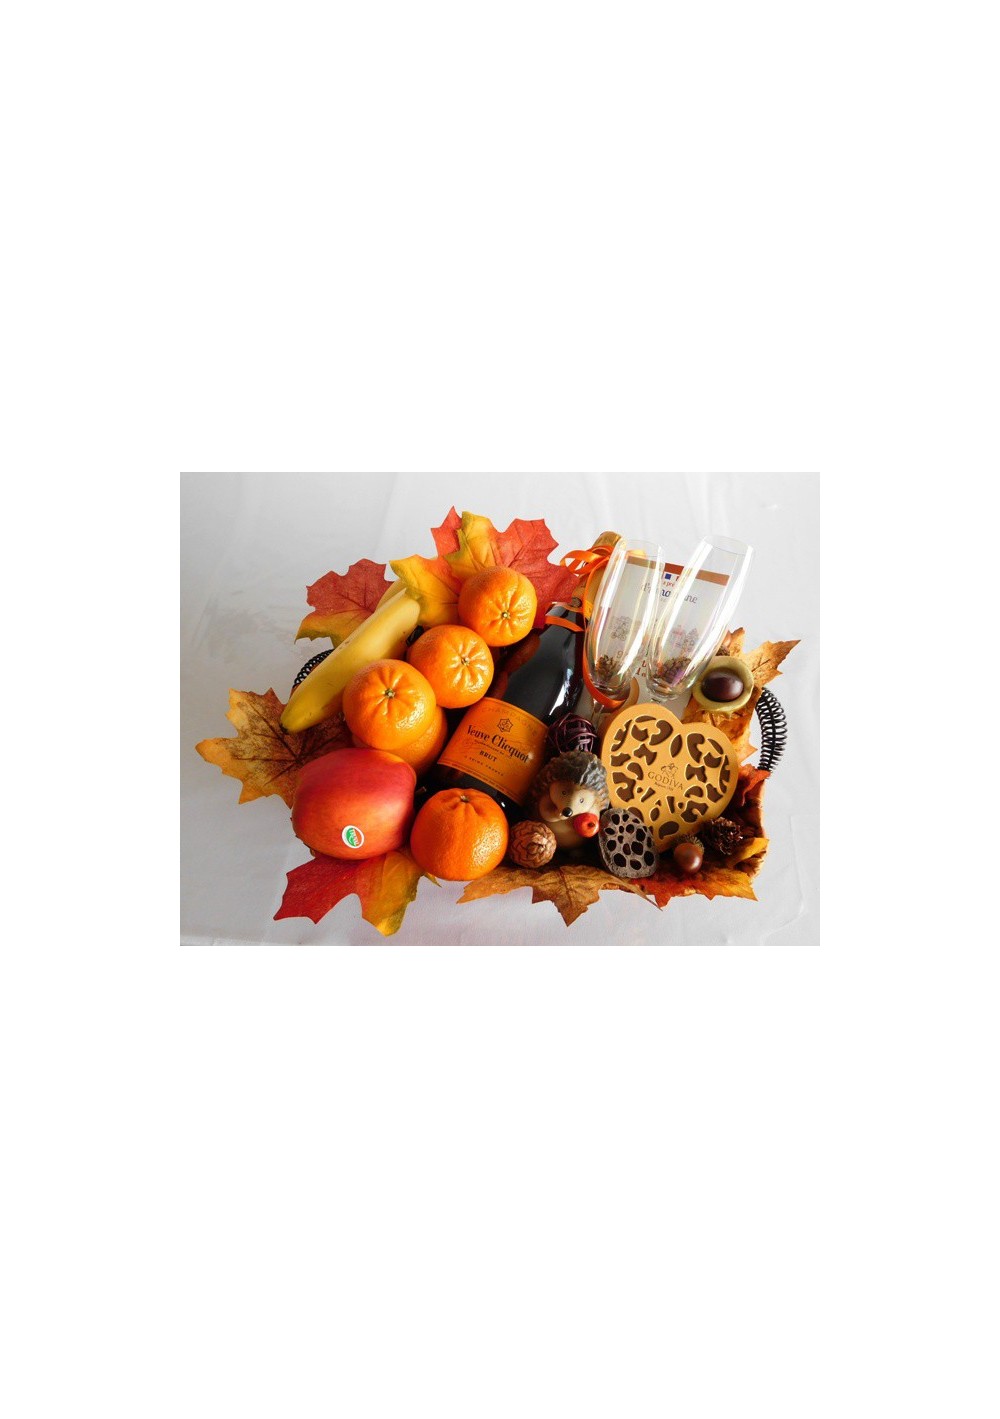 Sweetness & vitamin fruit basket